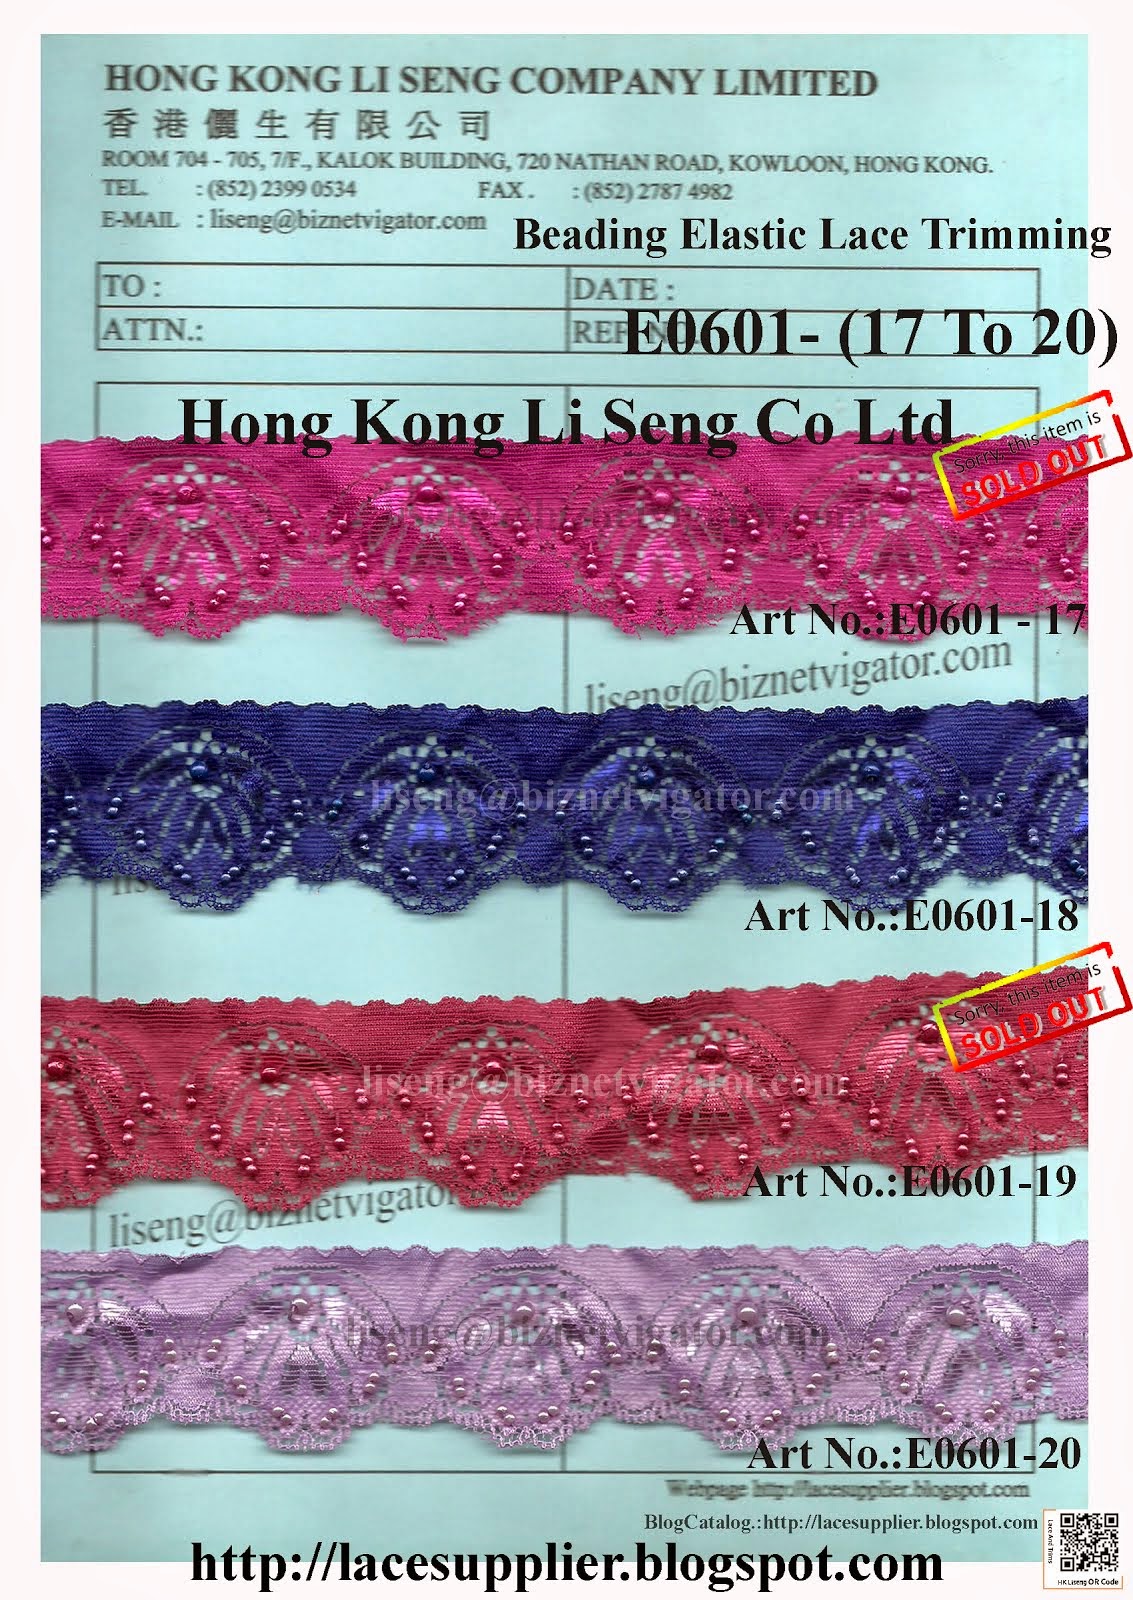 Beads and Sequins Elastic Lace Trimming Manufacturer Wholesaler Supplier - Hong Kong Li Seng Co Ltd